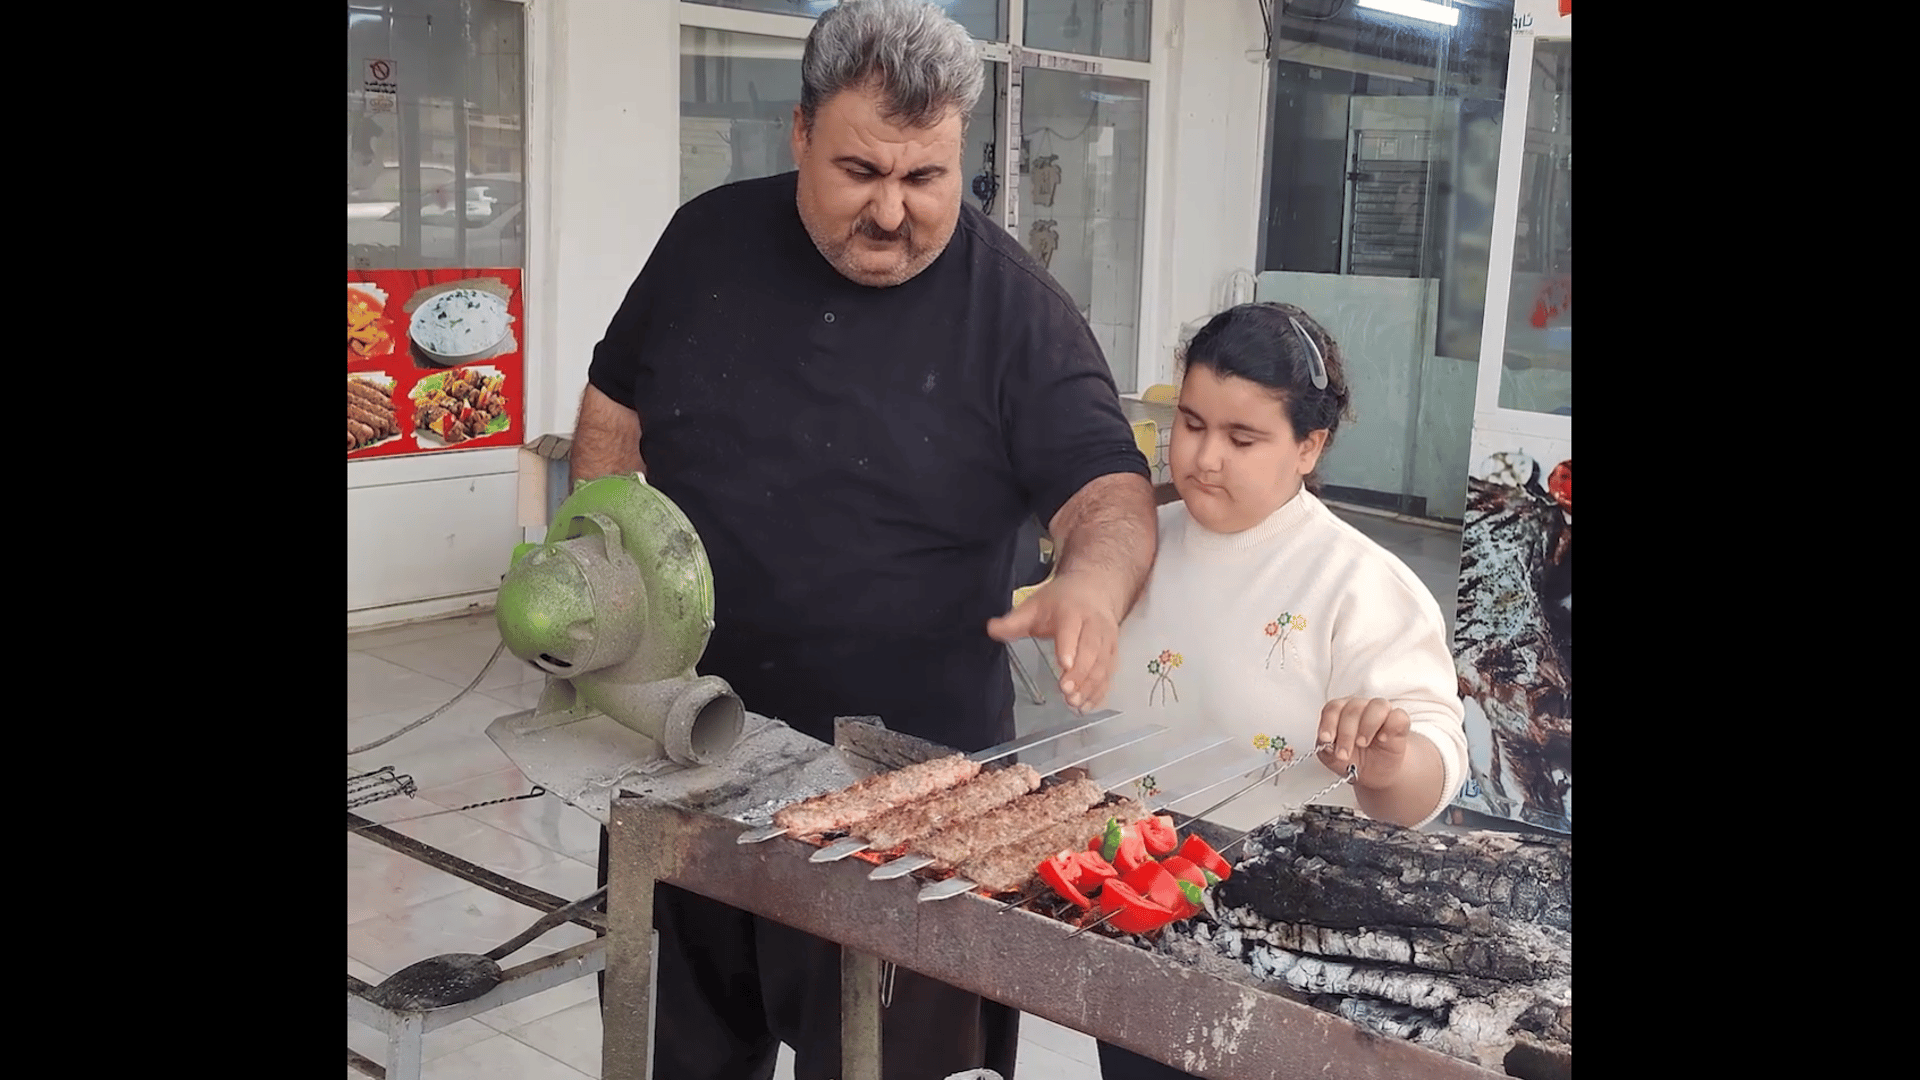 Nineyearold becomes Sulaymaniyahs youngest kebab chef